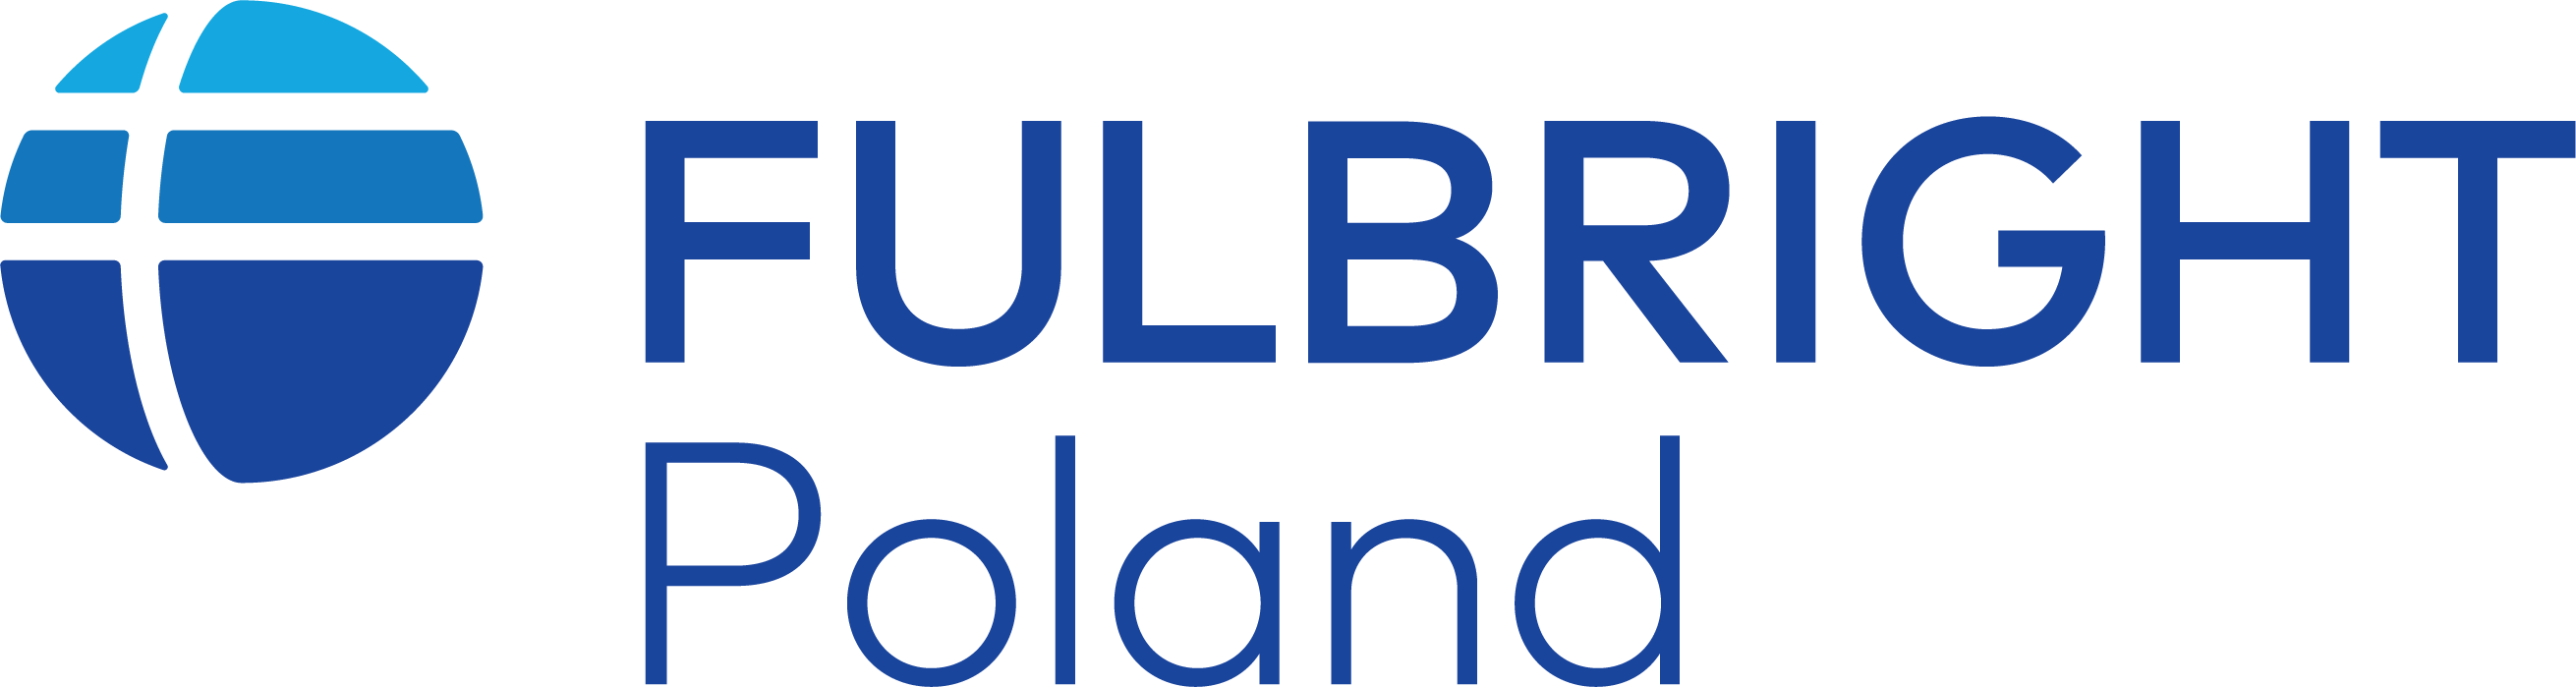 Fulbright_Poland_logo_blue.png